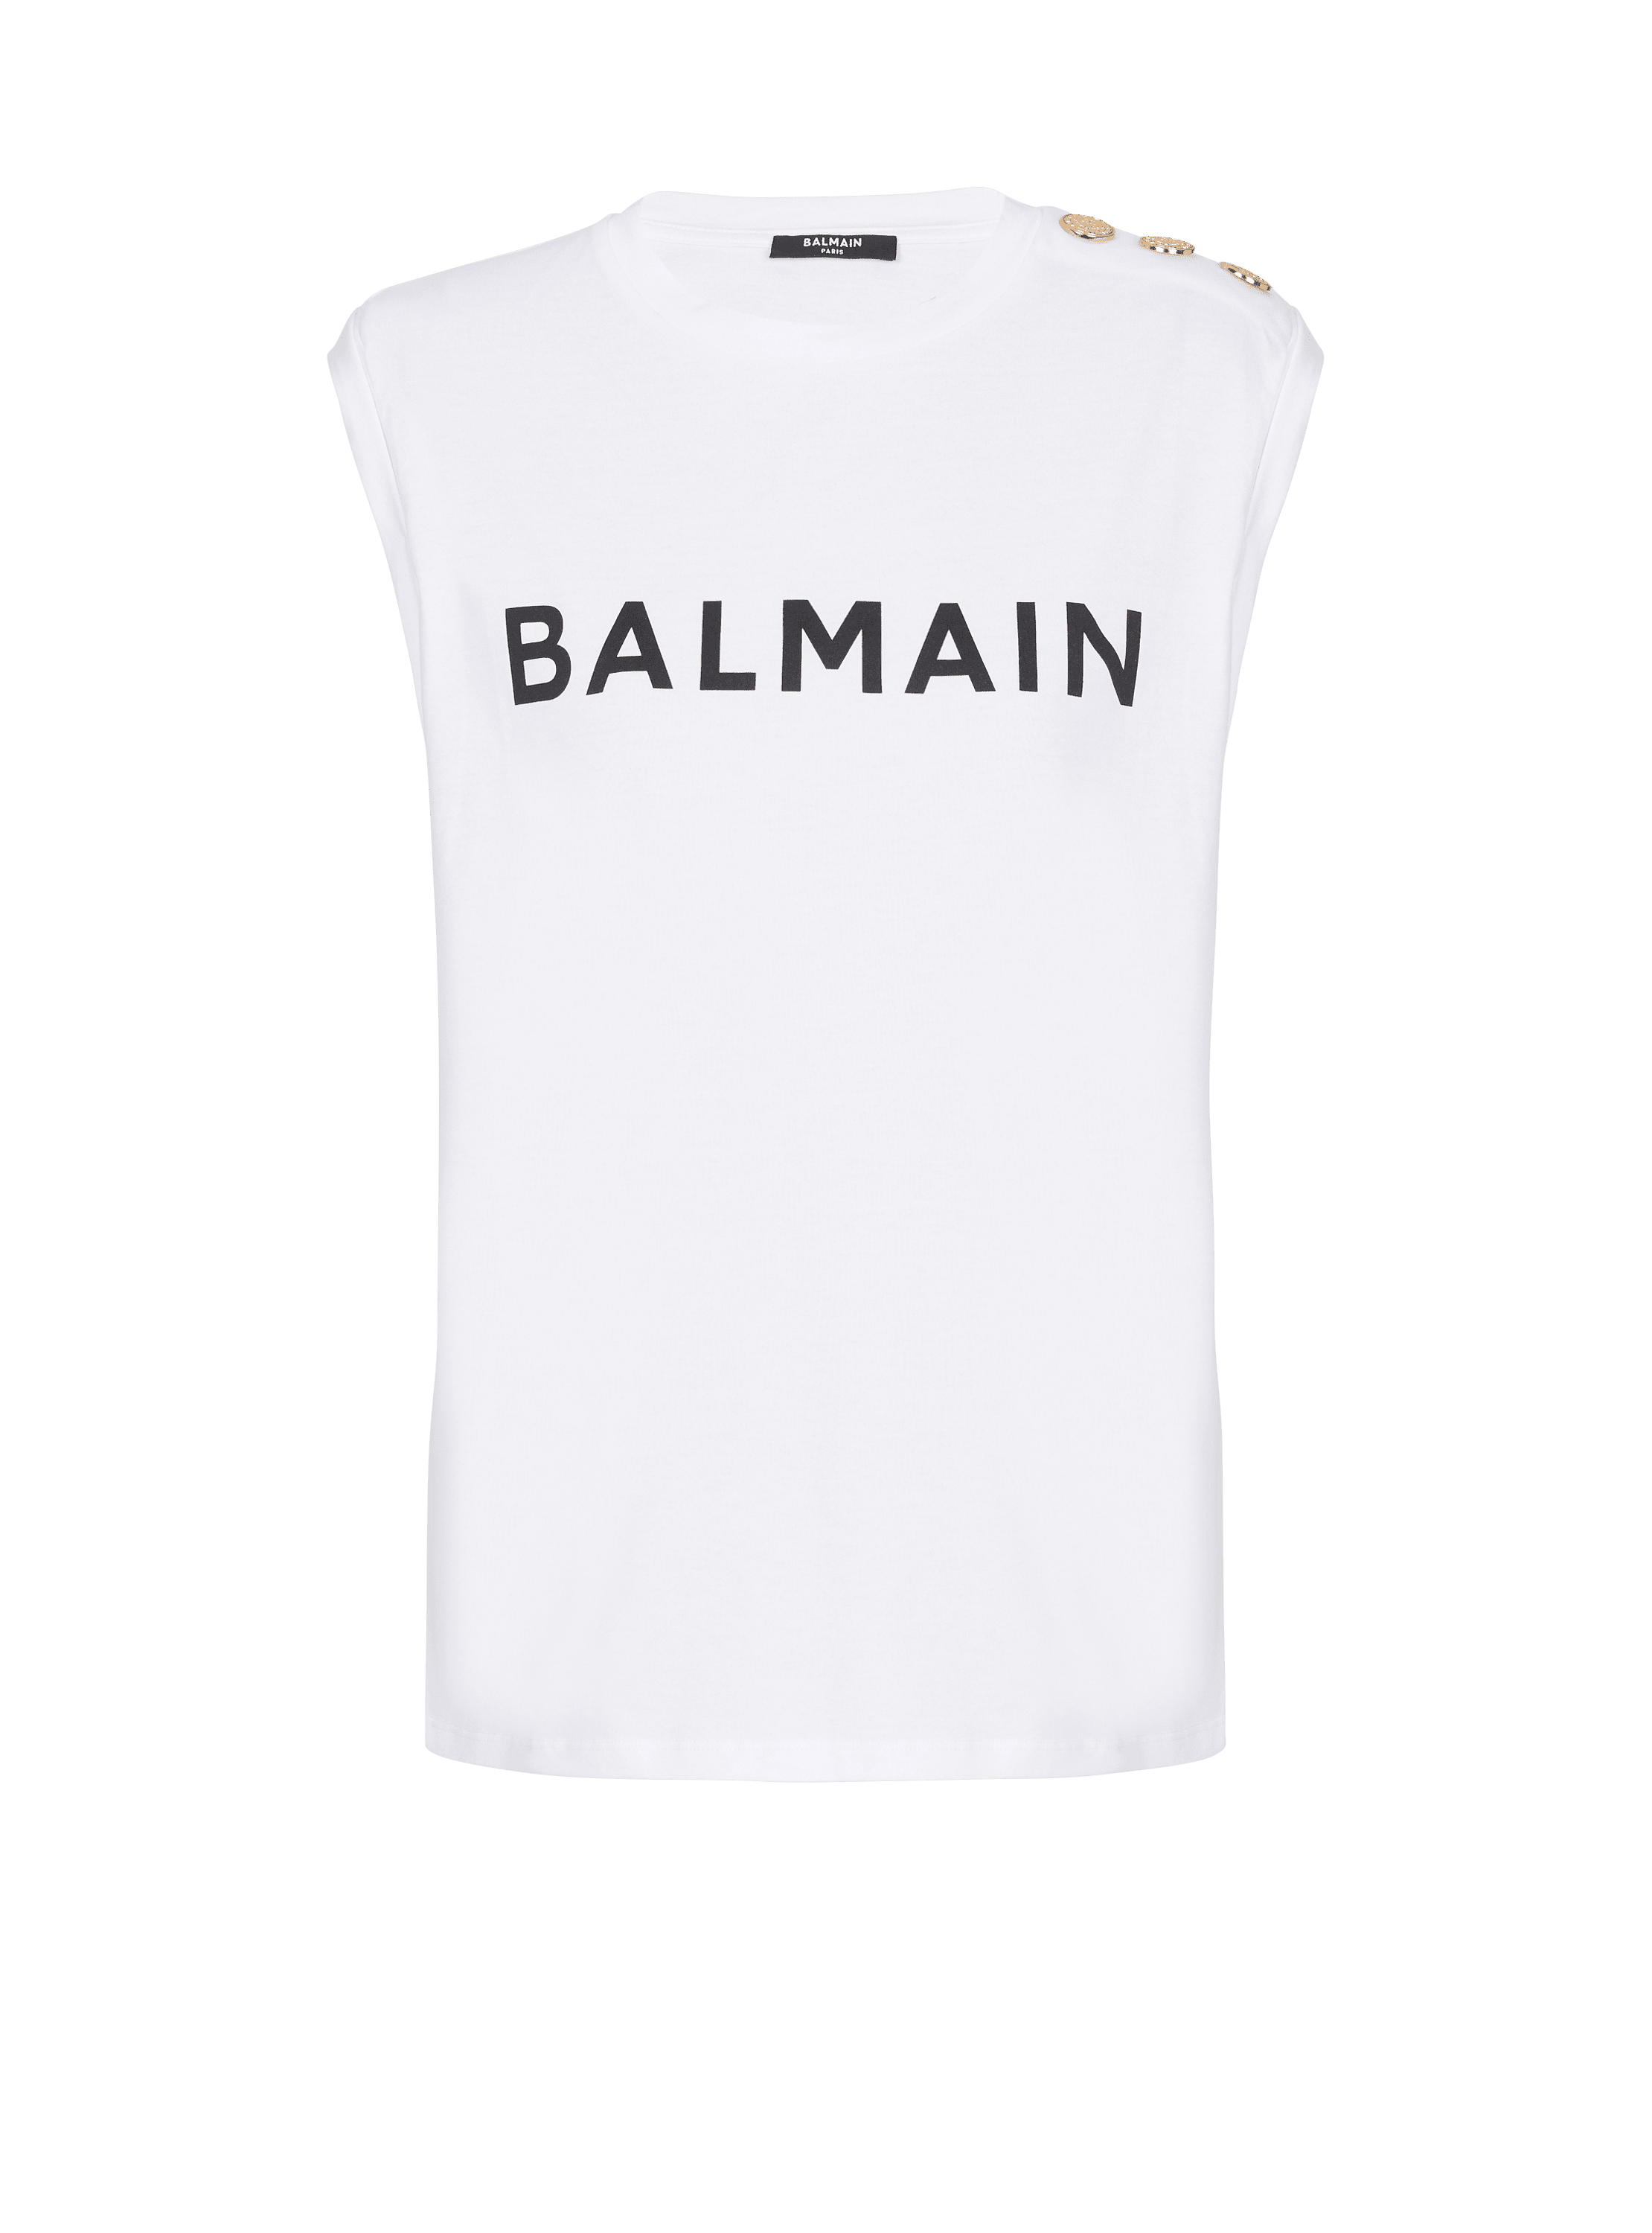 T-shirt en coton éco-responsable imprimé logo Balmain, blanc, hi-res